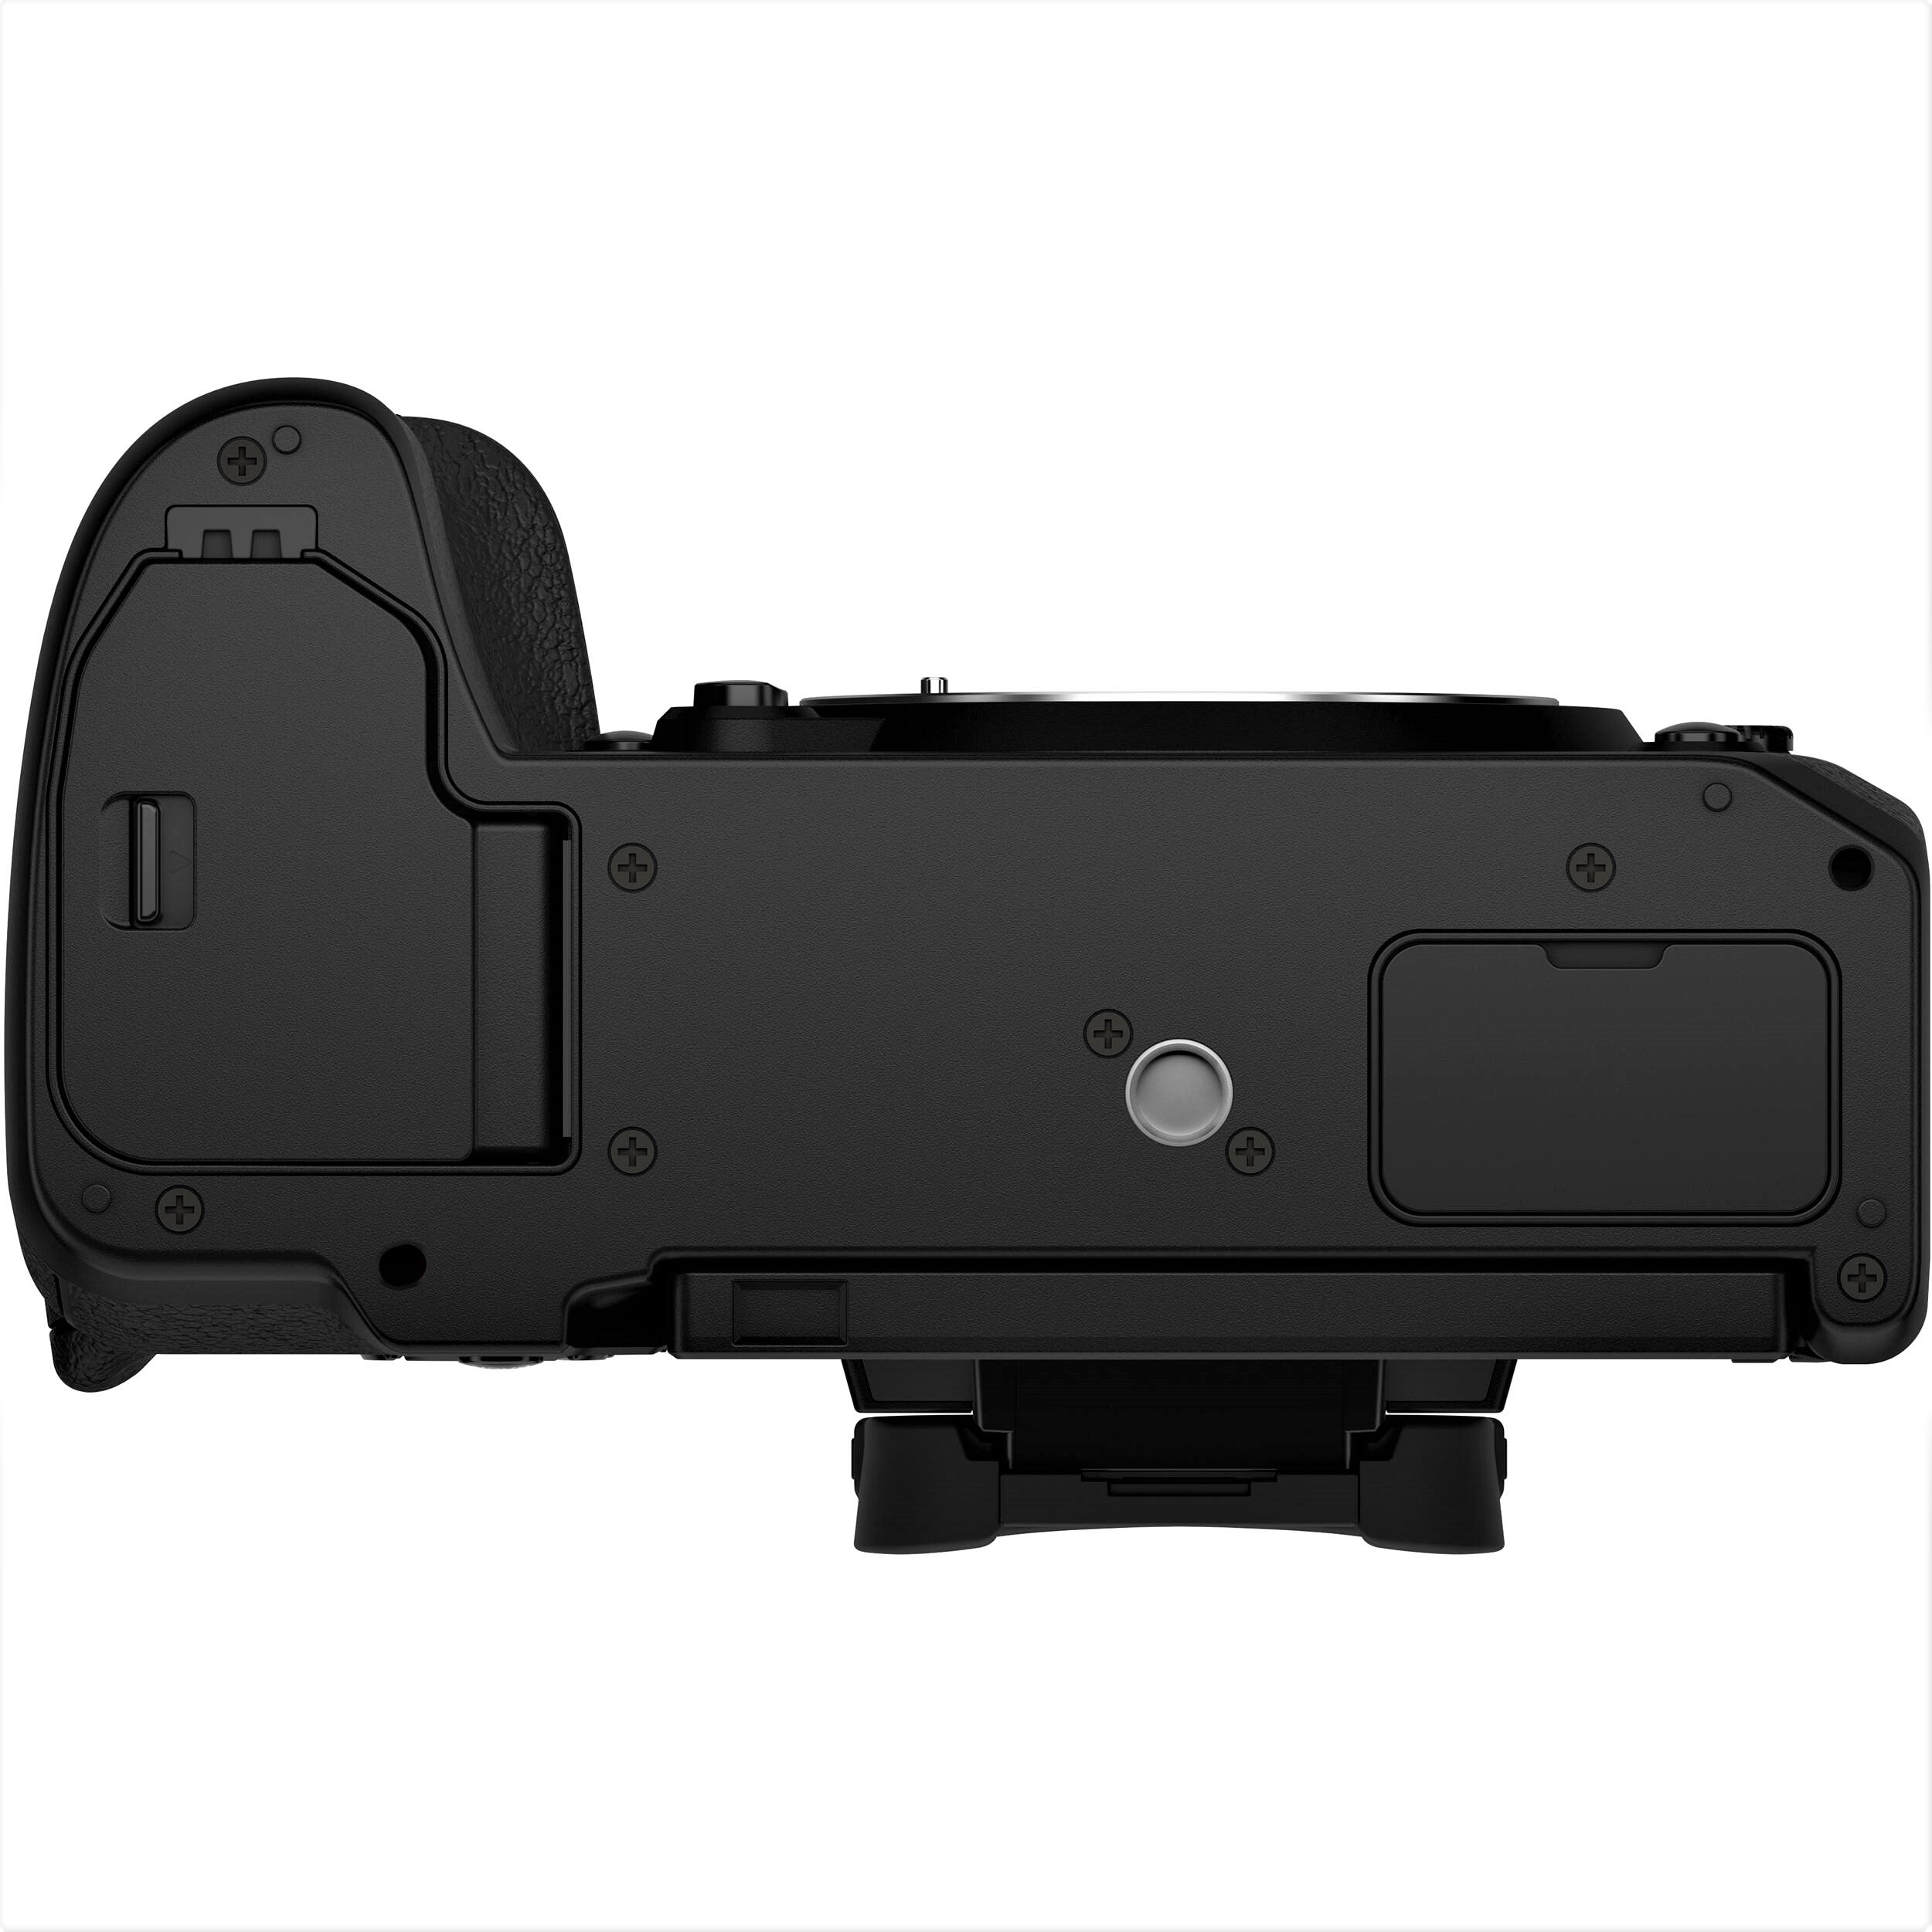 Fujifilm X-H2 Mirrorless Camera - Bottom View